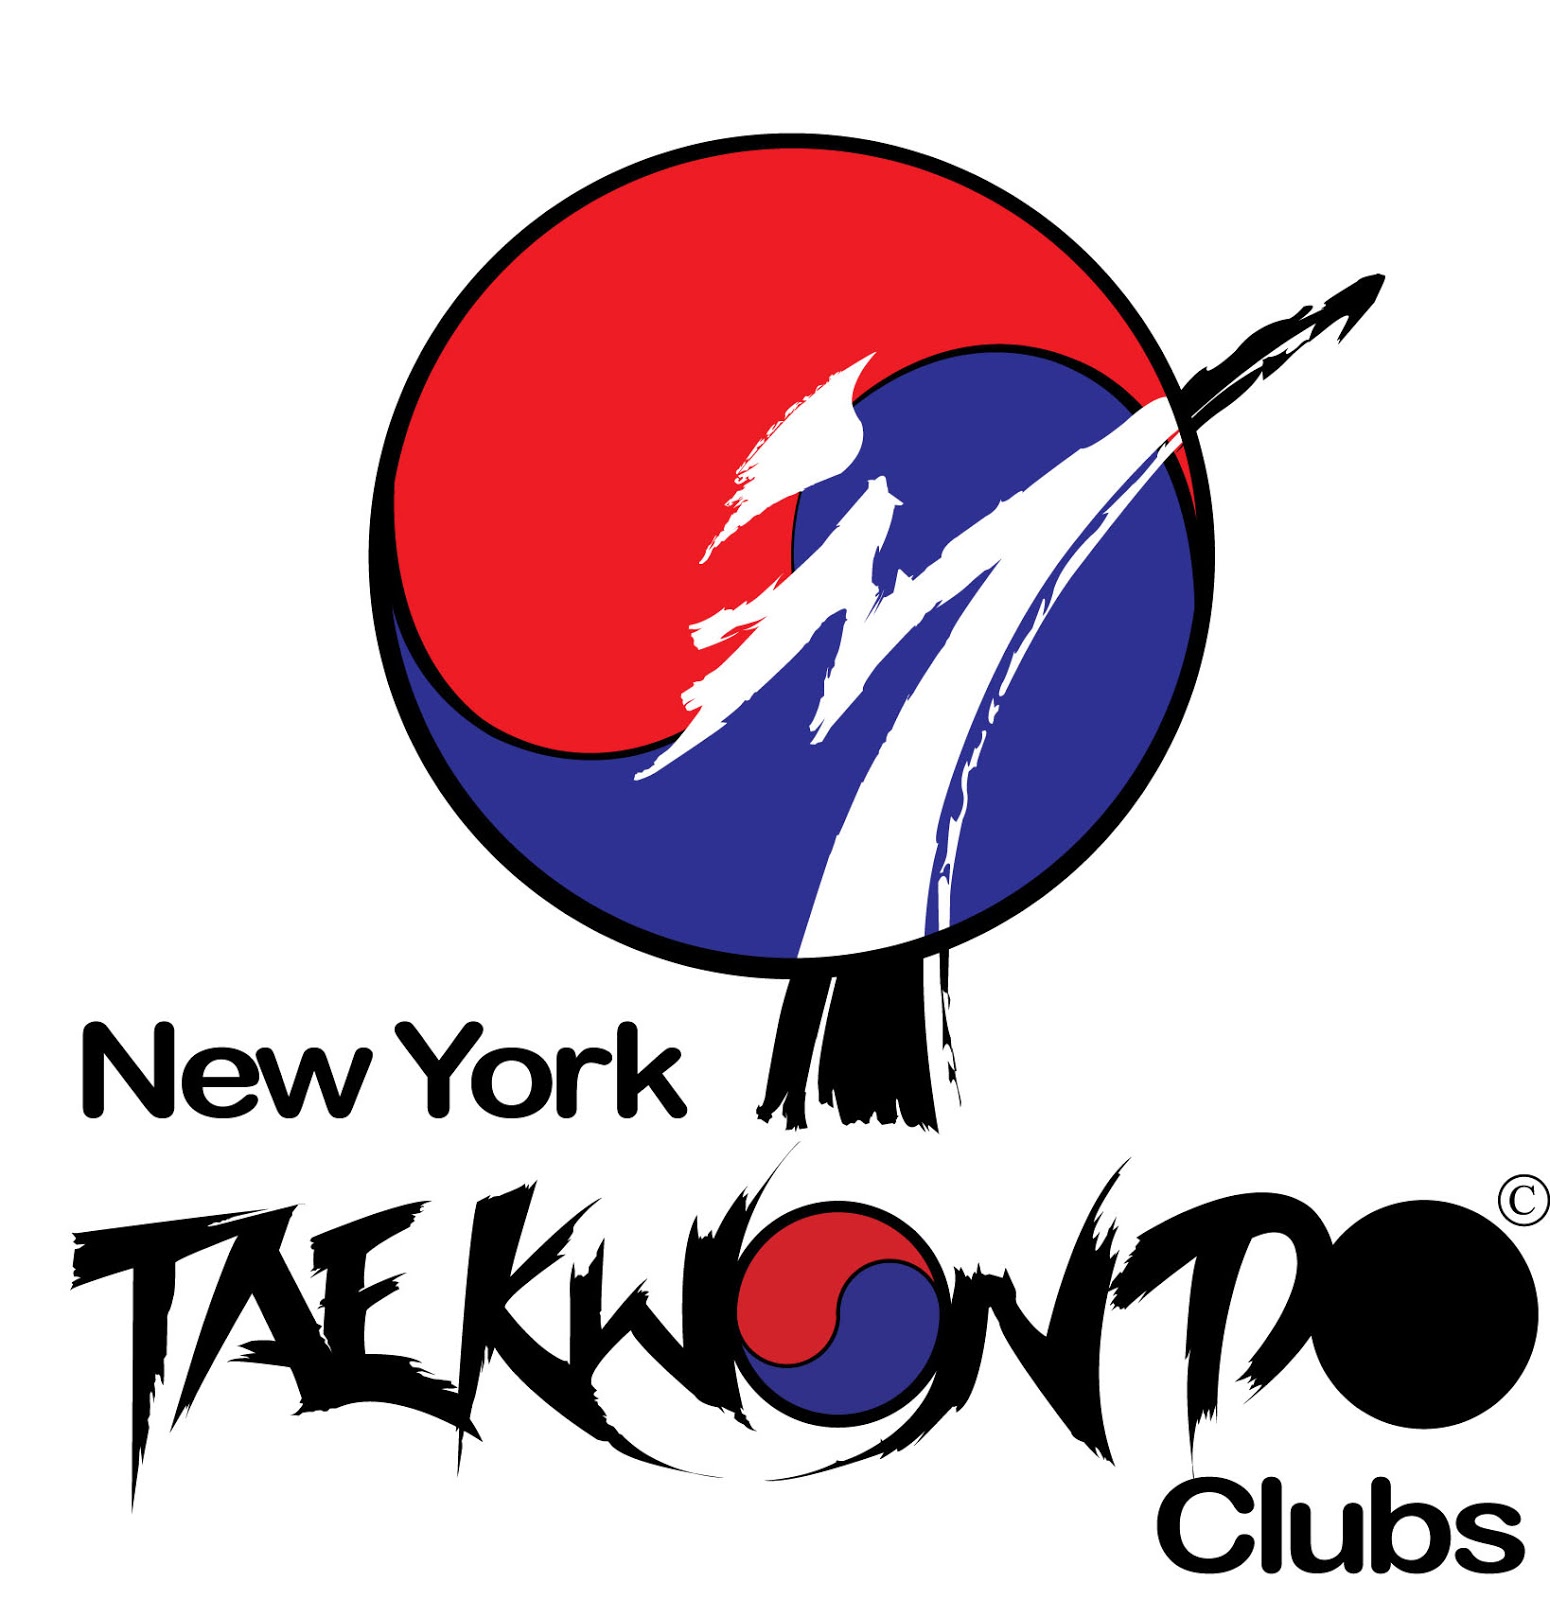 Photo of New York Taekwondo in Richmond City, New York, United States - 1 Picture of Point of interest, Establishment, Health